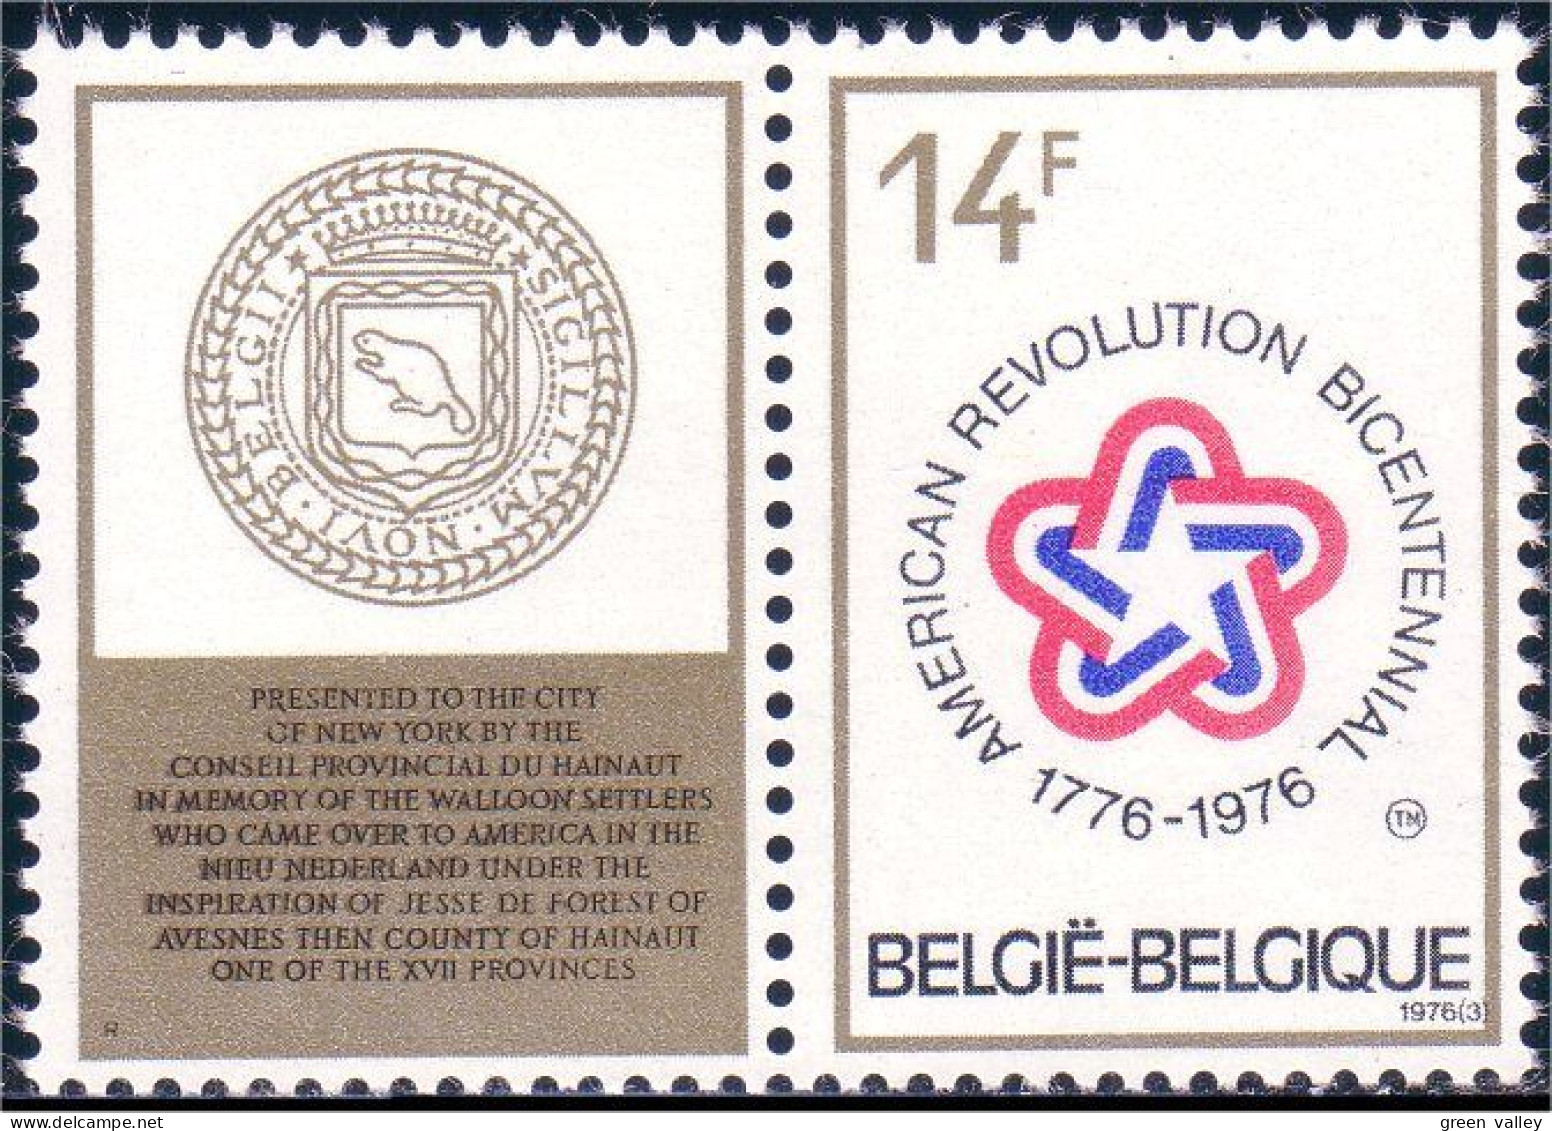 198 Belgium Wallons Walloon Immigrants New York MNH ** Neuf SC (BEL-362c) - Unabhängigkeit USA